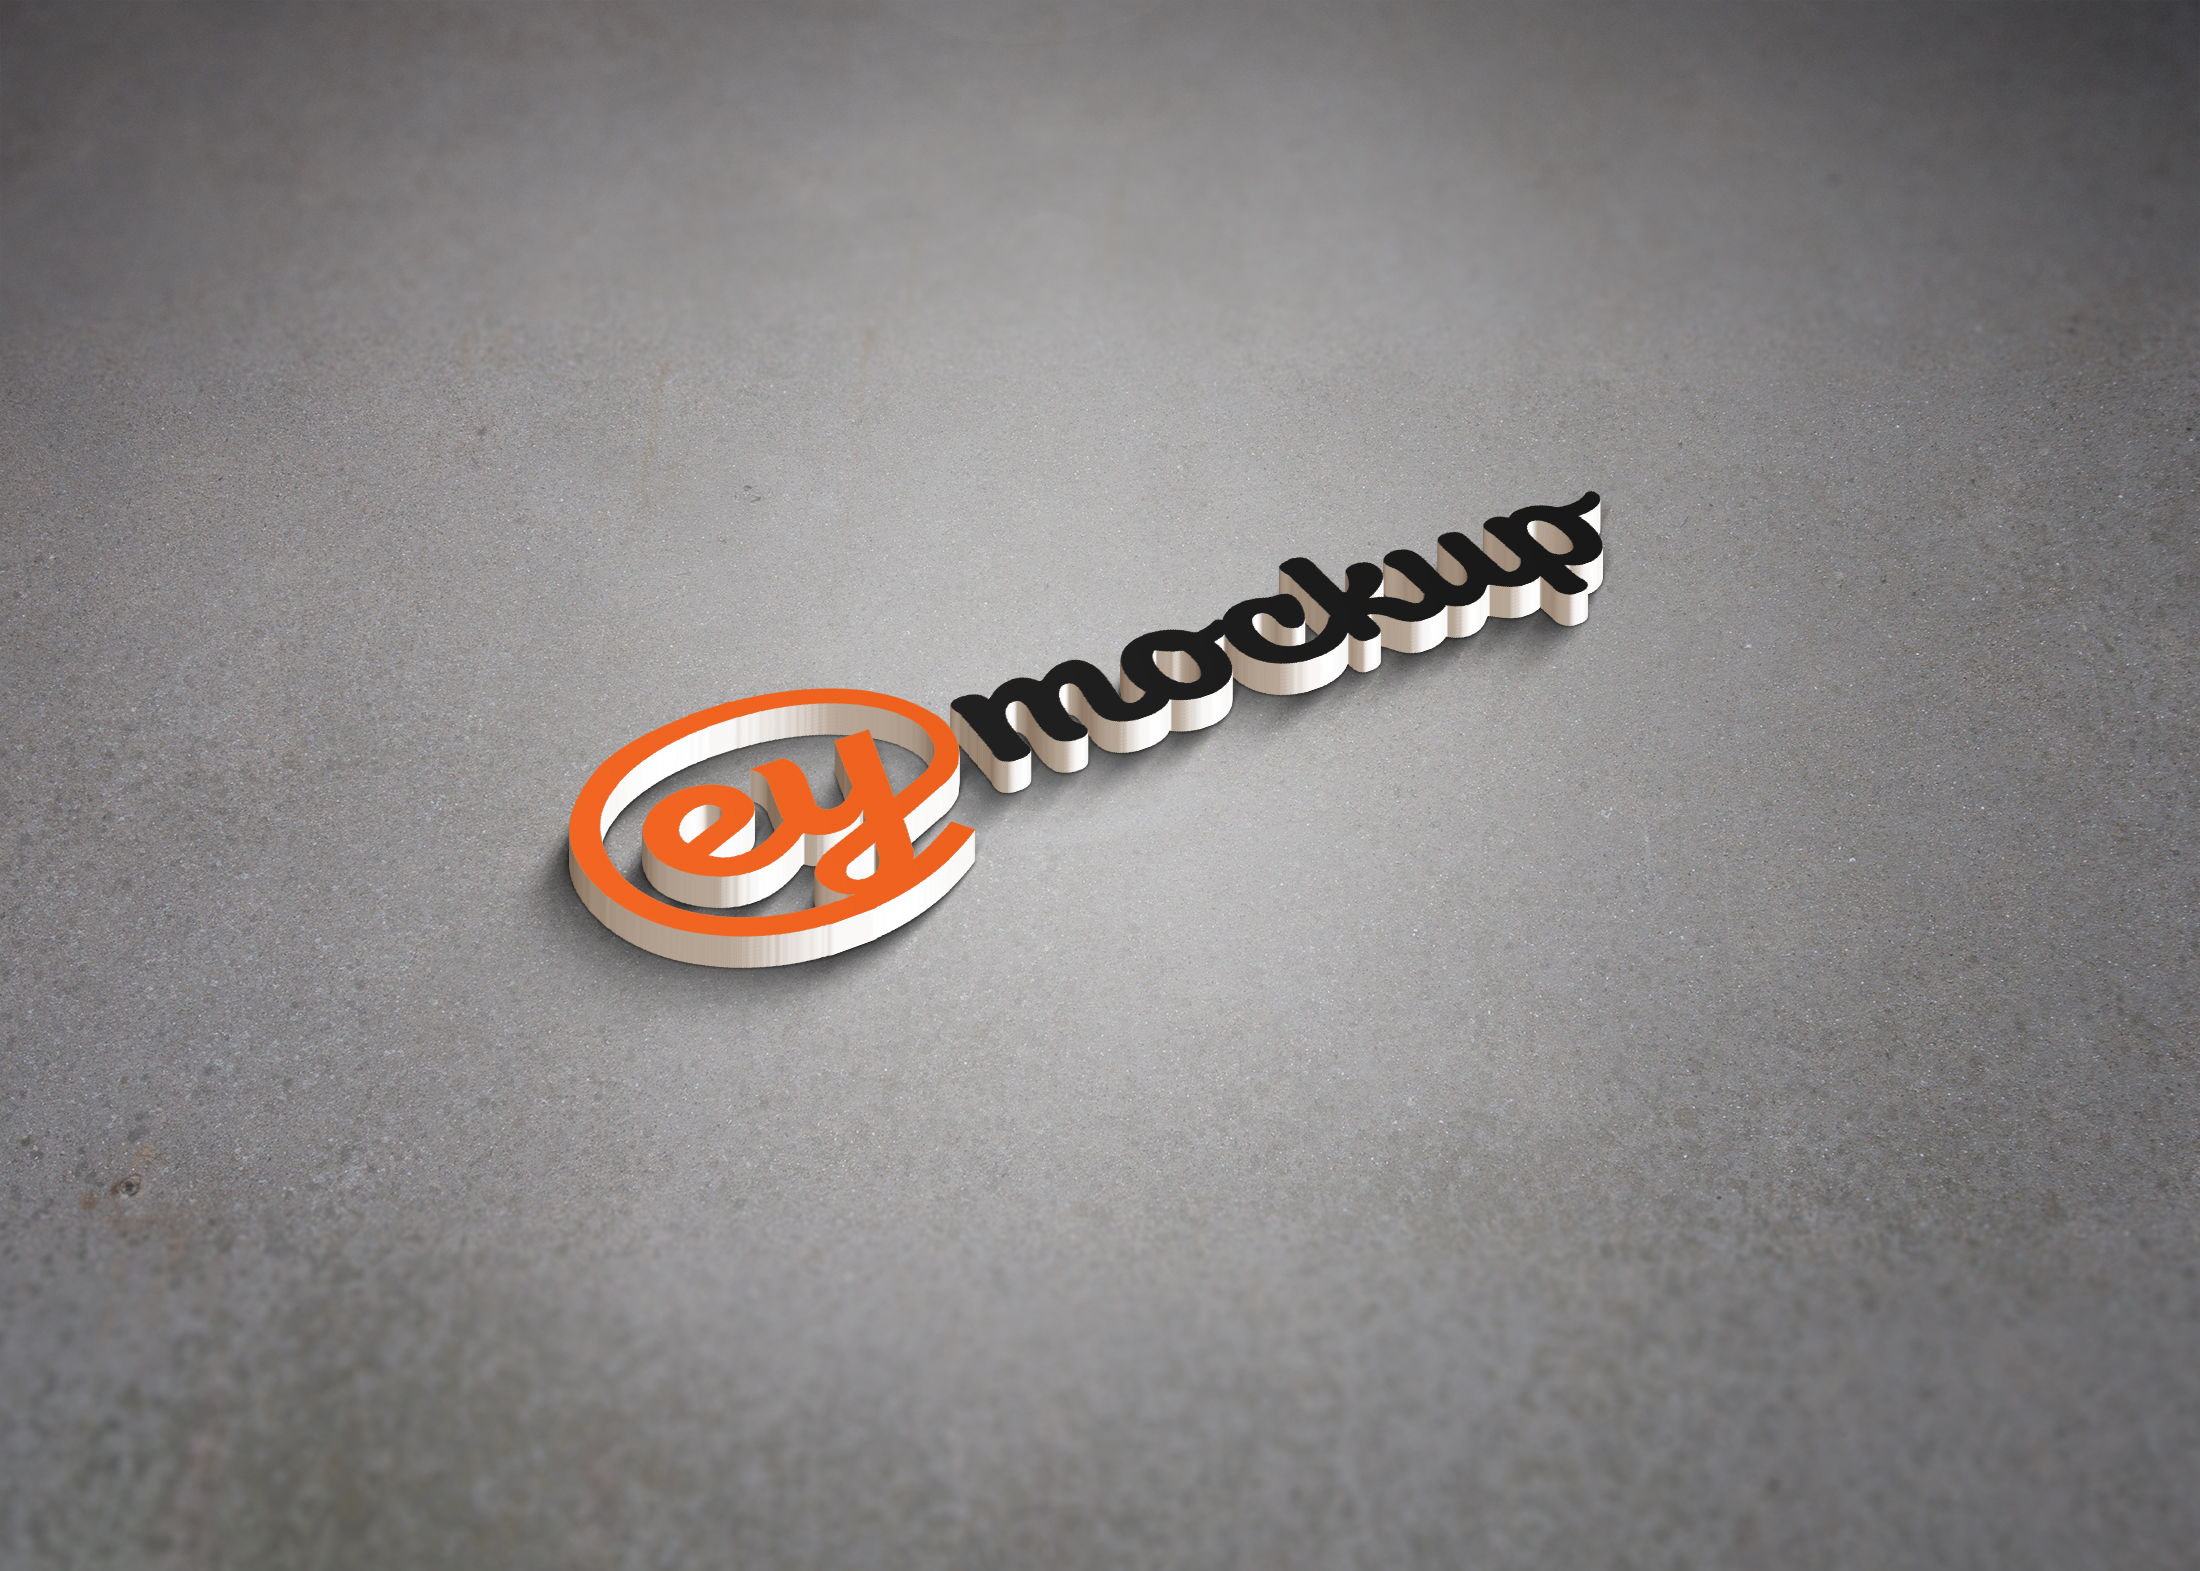 eymockup 3D Wall Logo Mockup